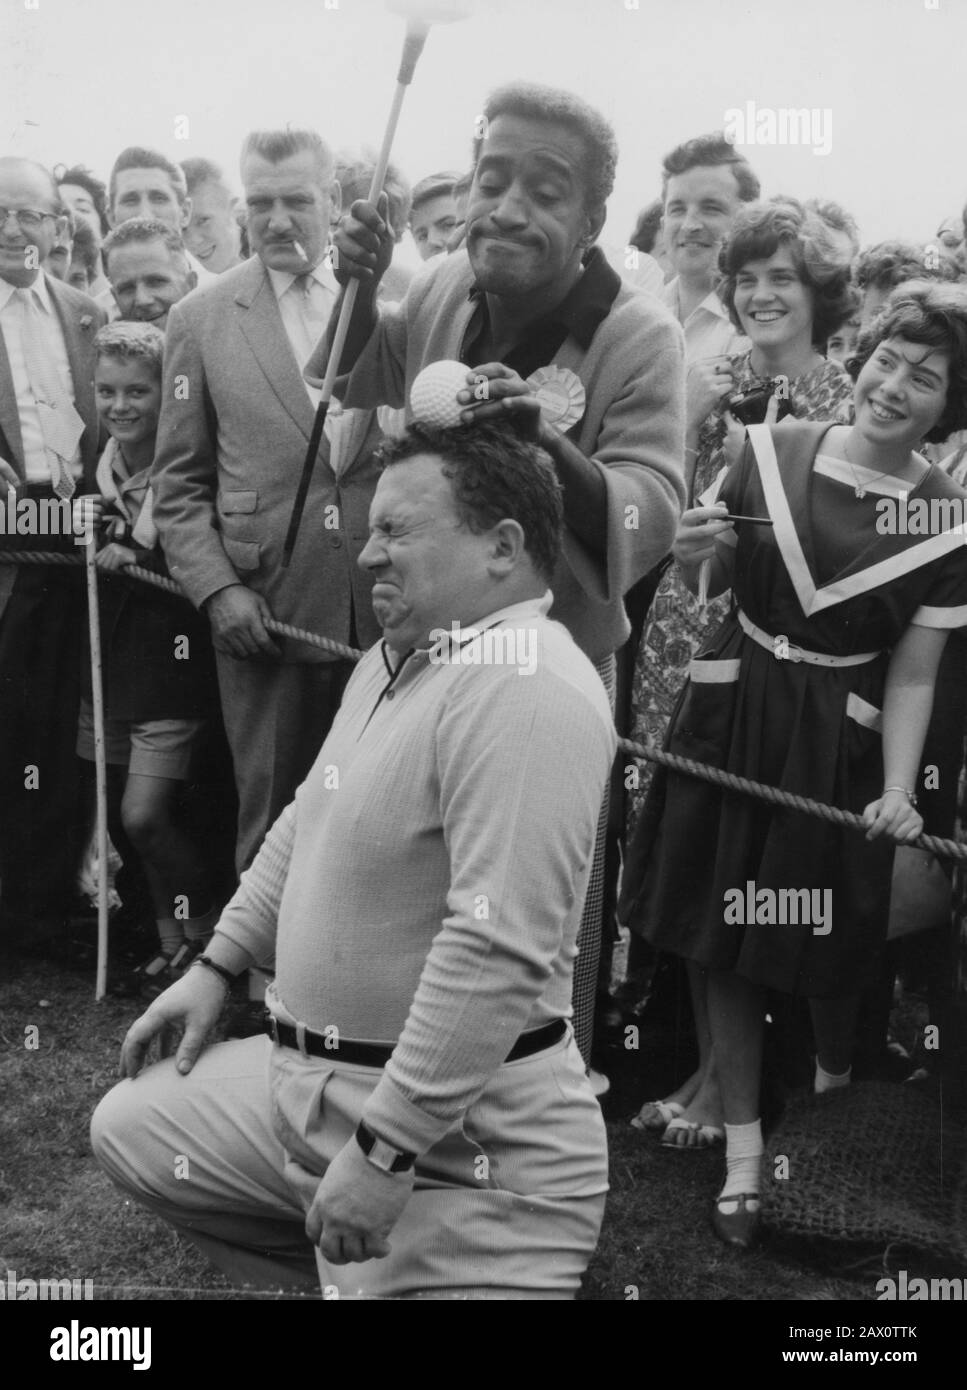 Sammy Davis Jr, Harry Secombe, Pro-Am Golf, Londres Du Nord, 1962. Banque D'Images